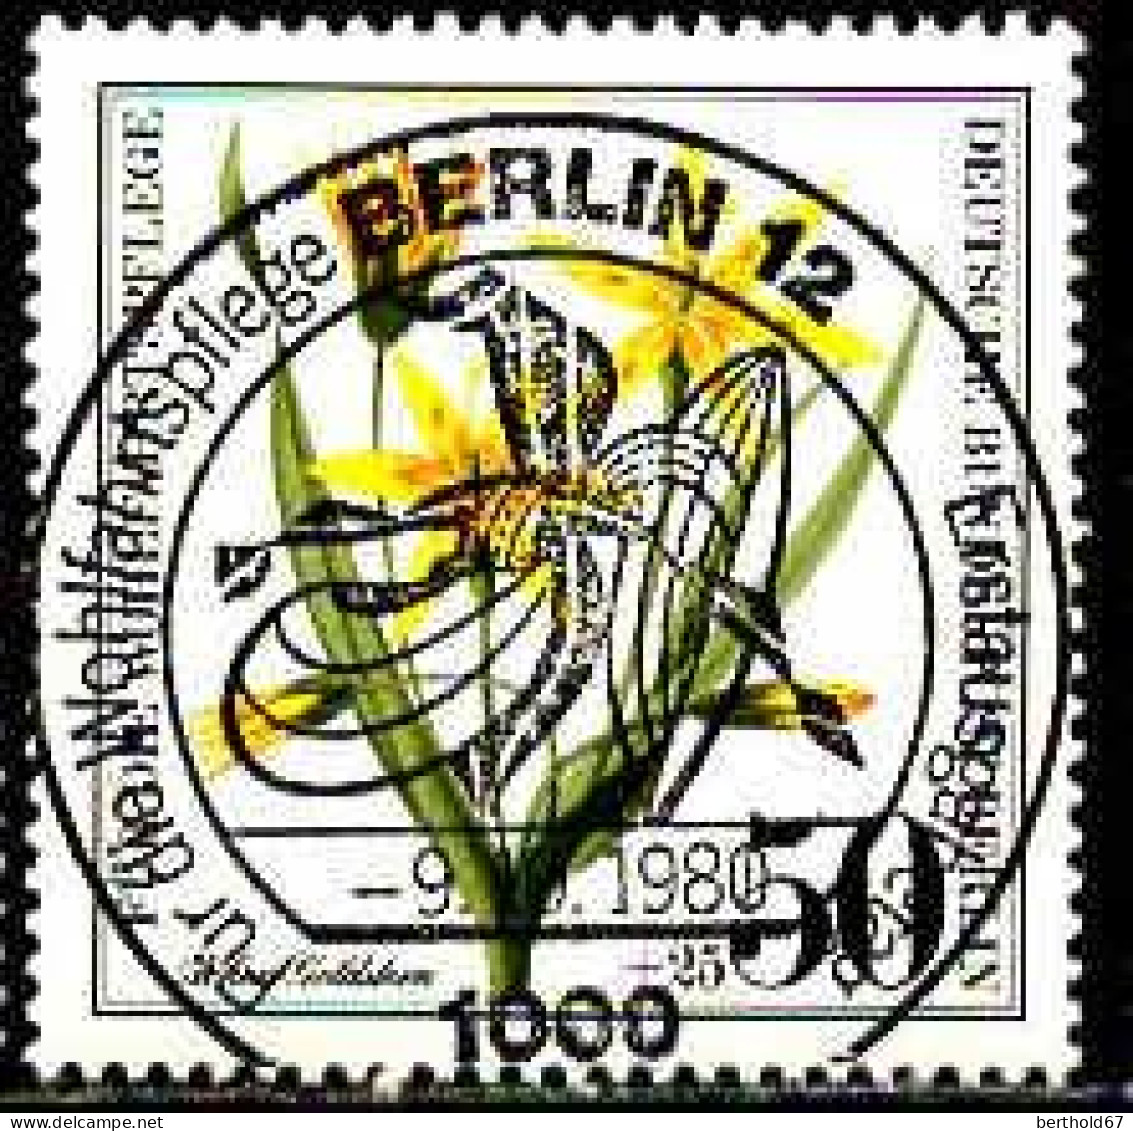 Berlin Poste Obl Yv:590/593 Bienfaisance Herbes Des Champs (TB Cachet Rond) - Usados